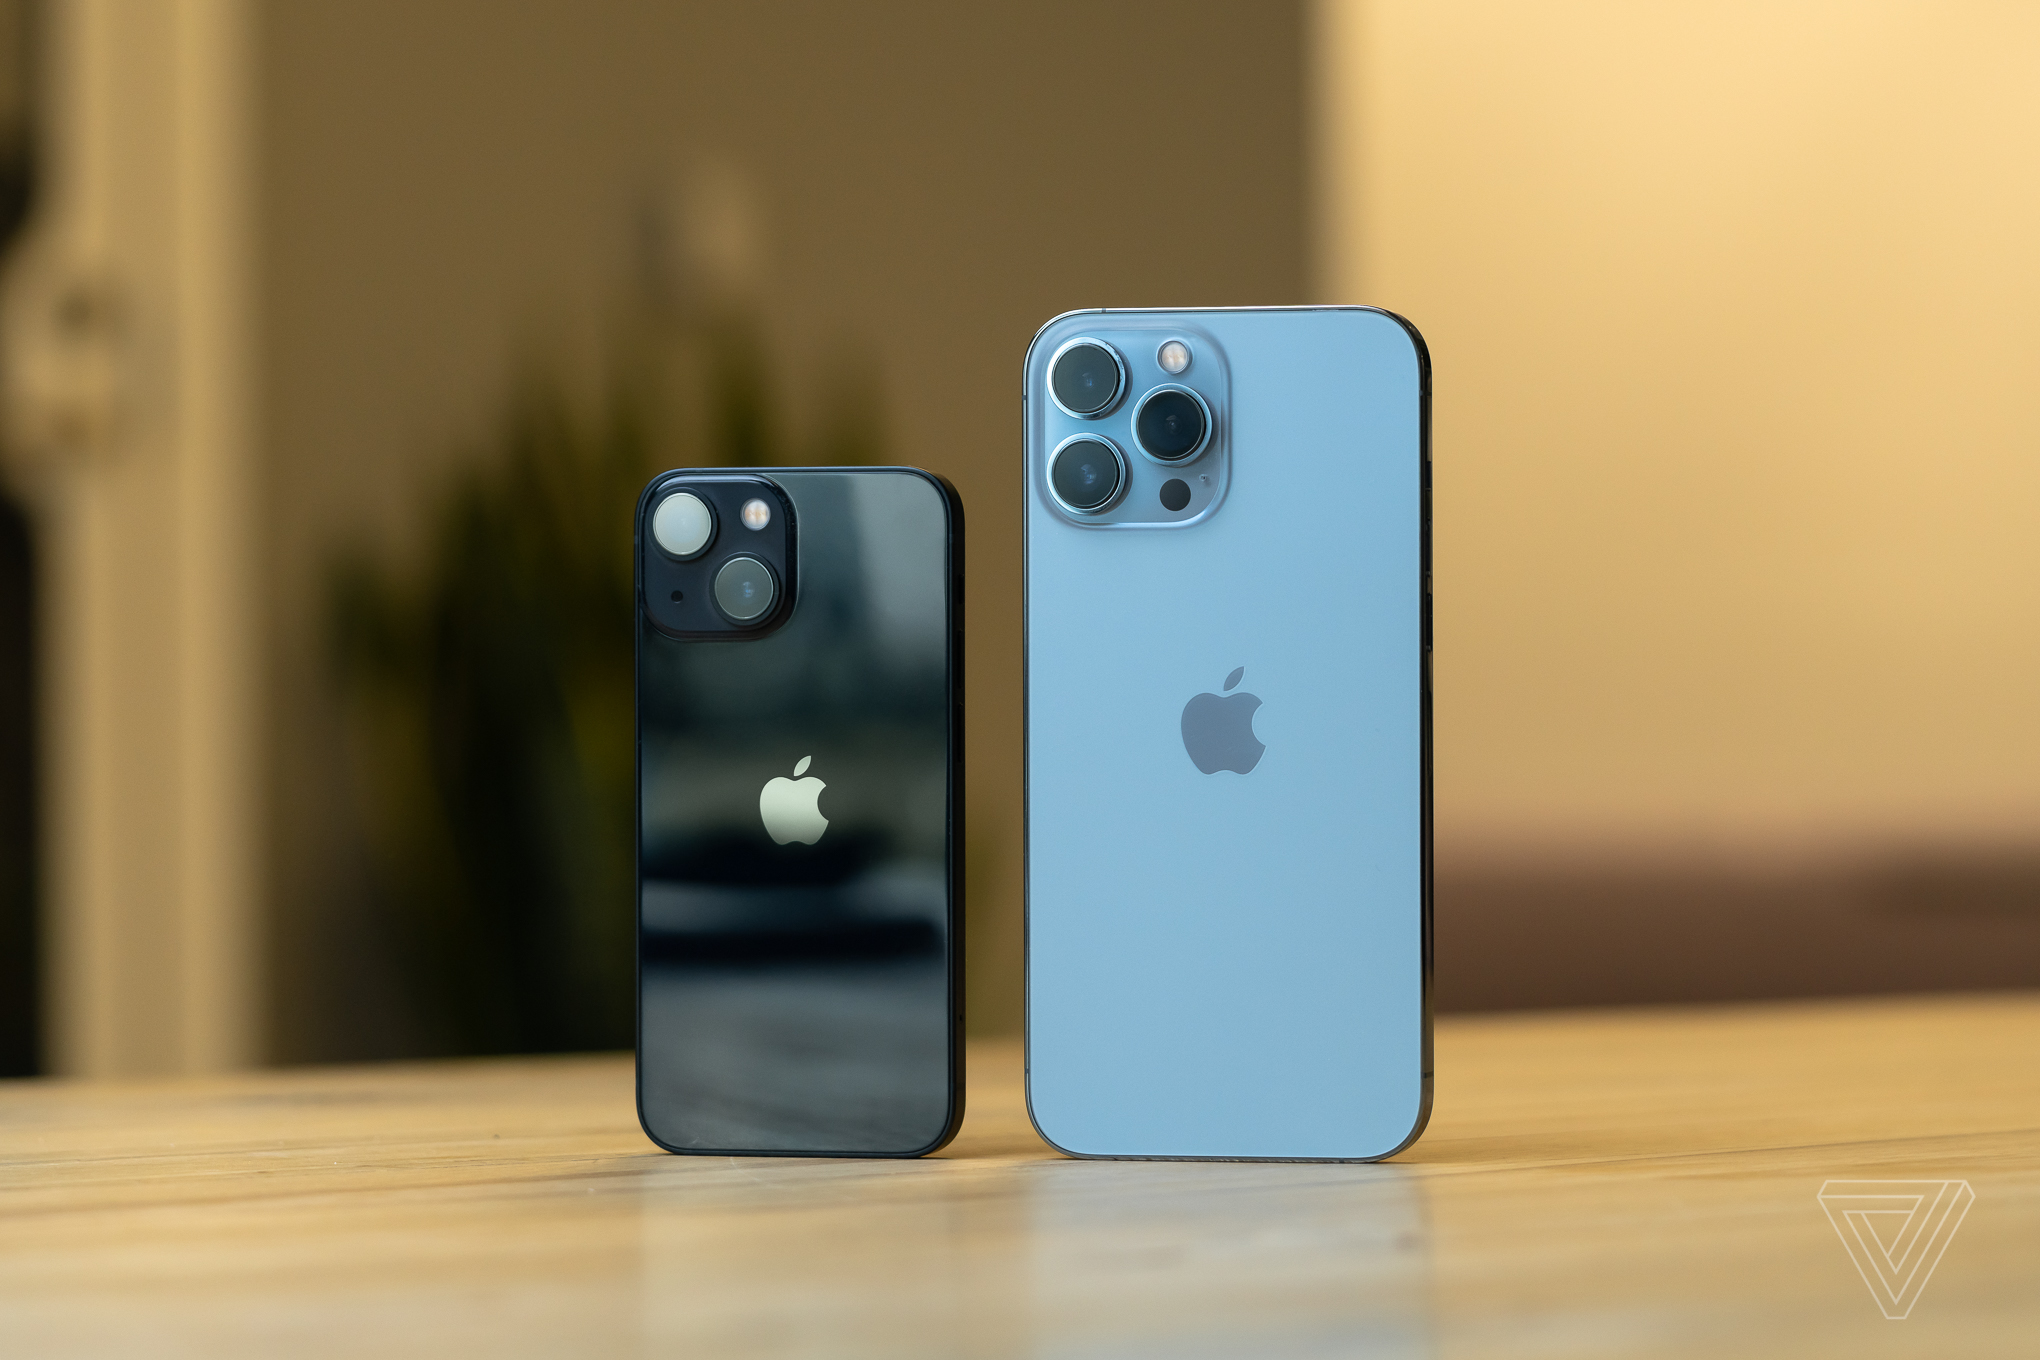 iPhone 13 Mini and iPhone 13 Pro Max